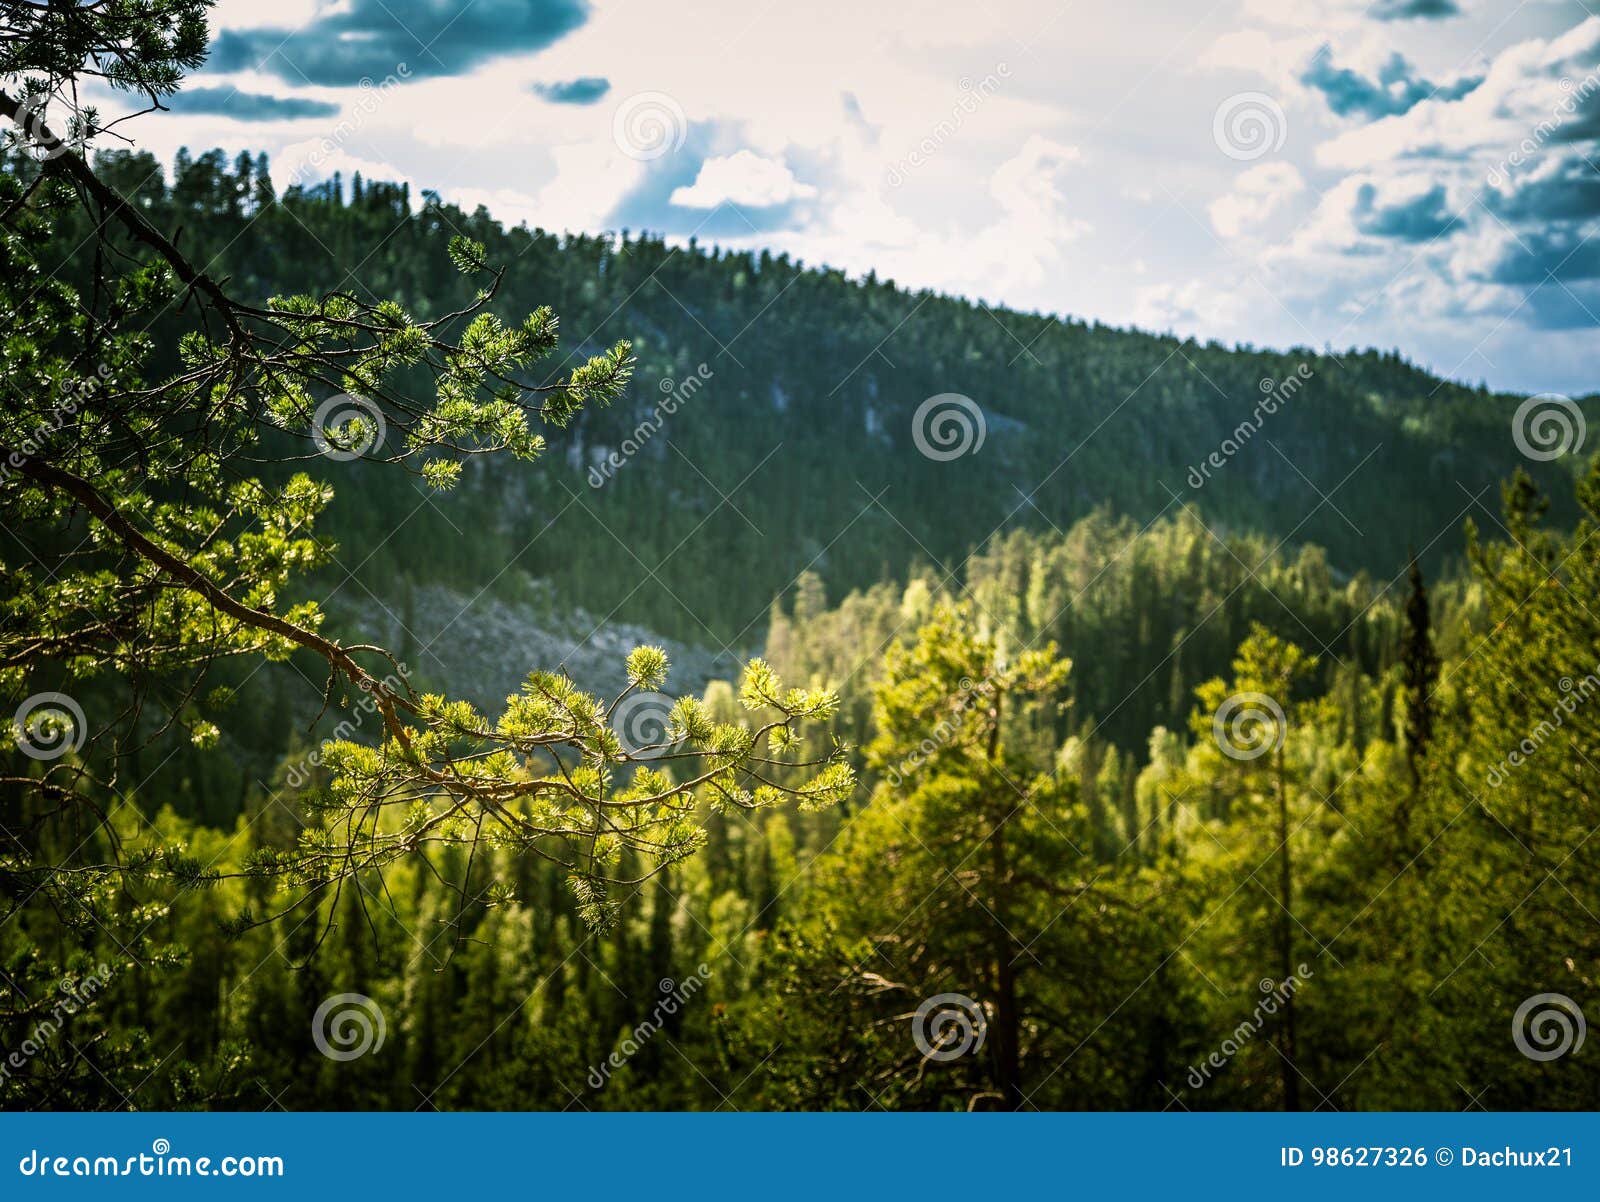 a beautiful finnish forest landscape